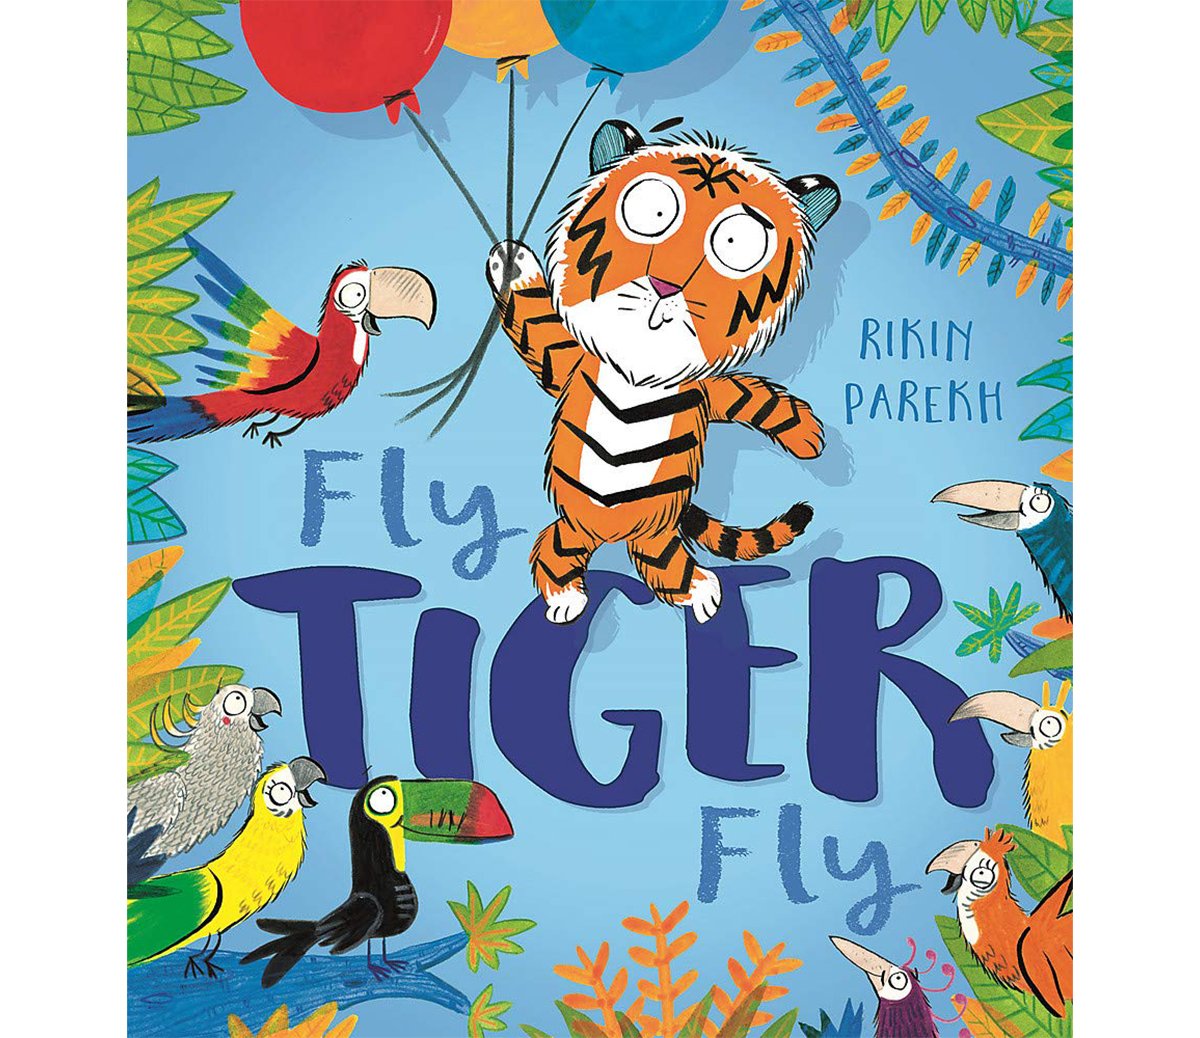 rikin-parekh-fly-tiger-fly-cover-illustration.jpg